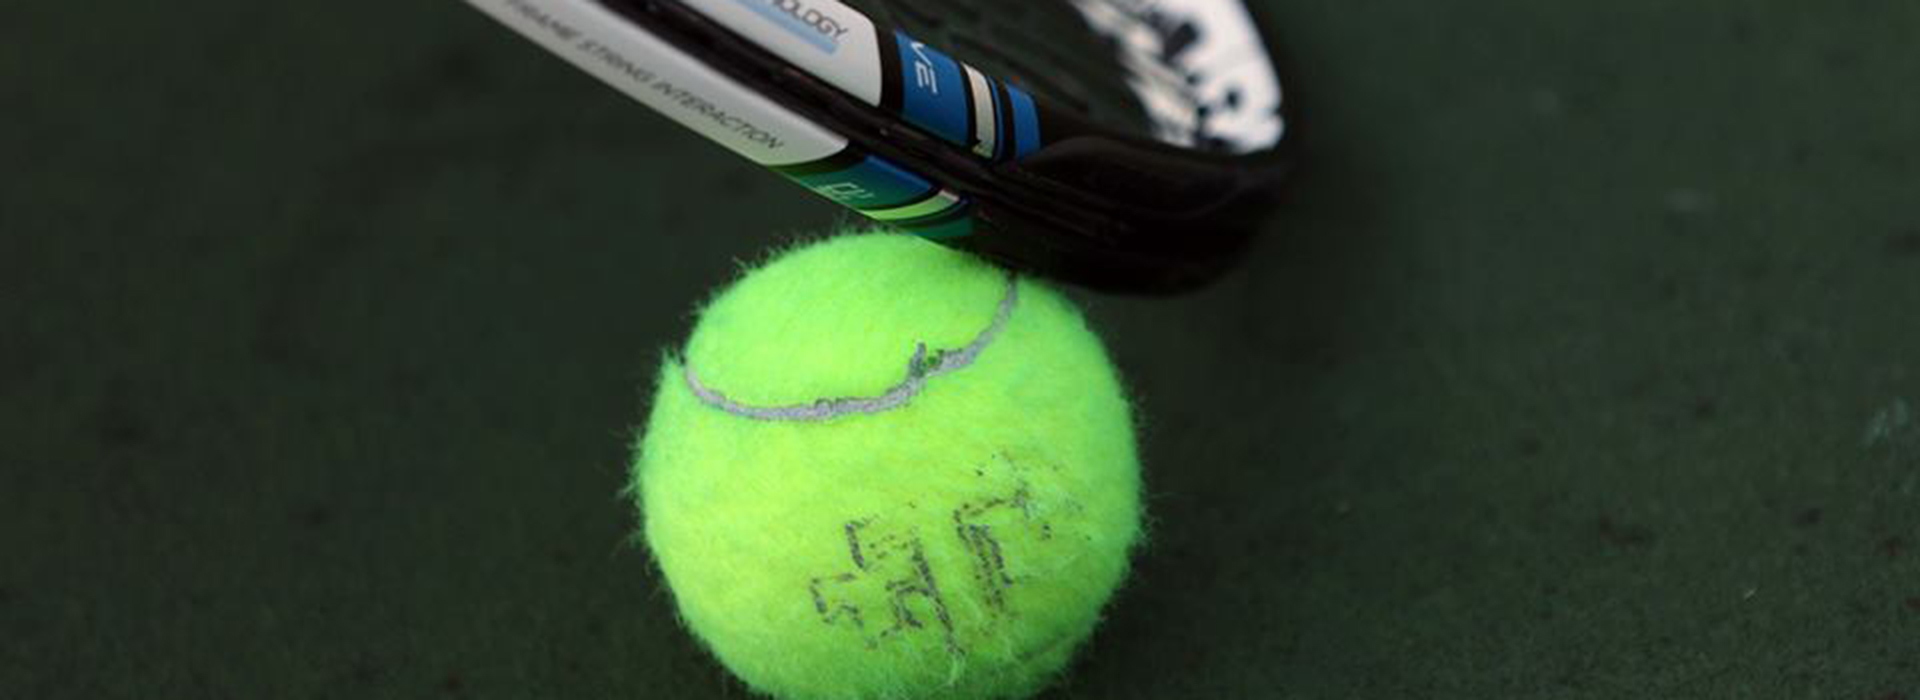 Friday’s Tech tennis match against Furman cancelled